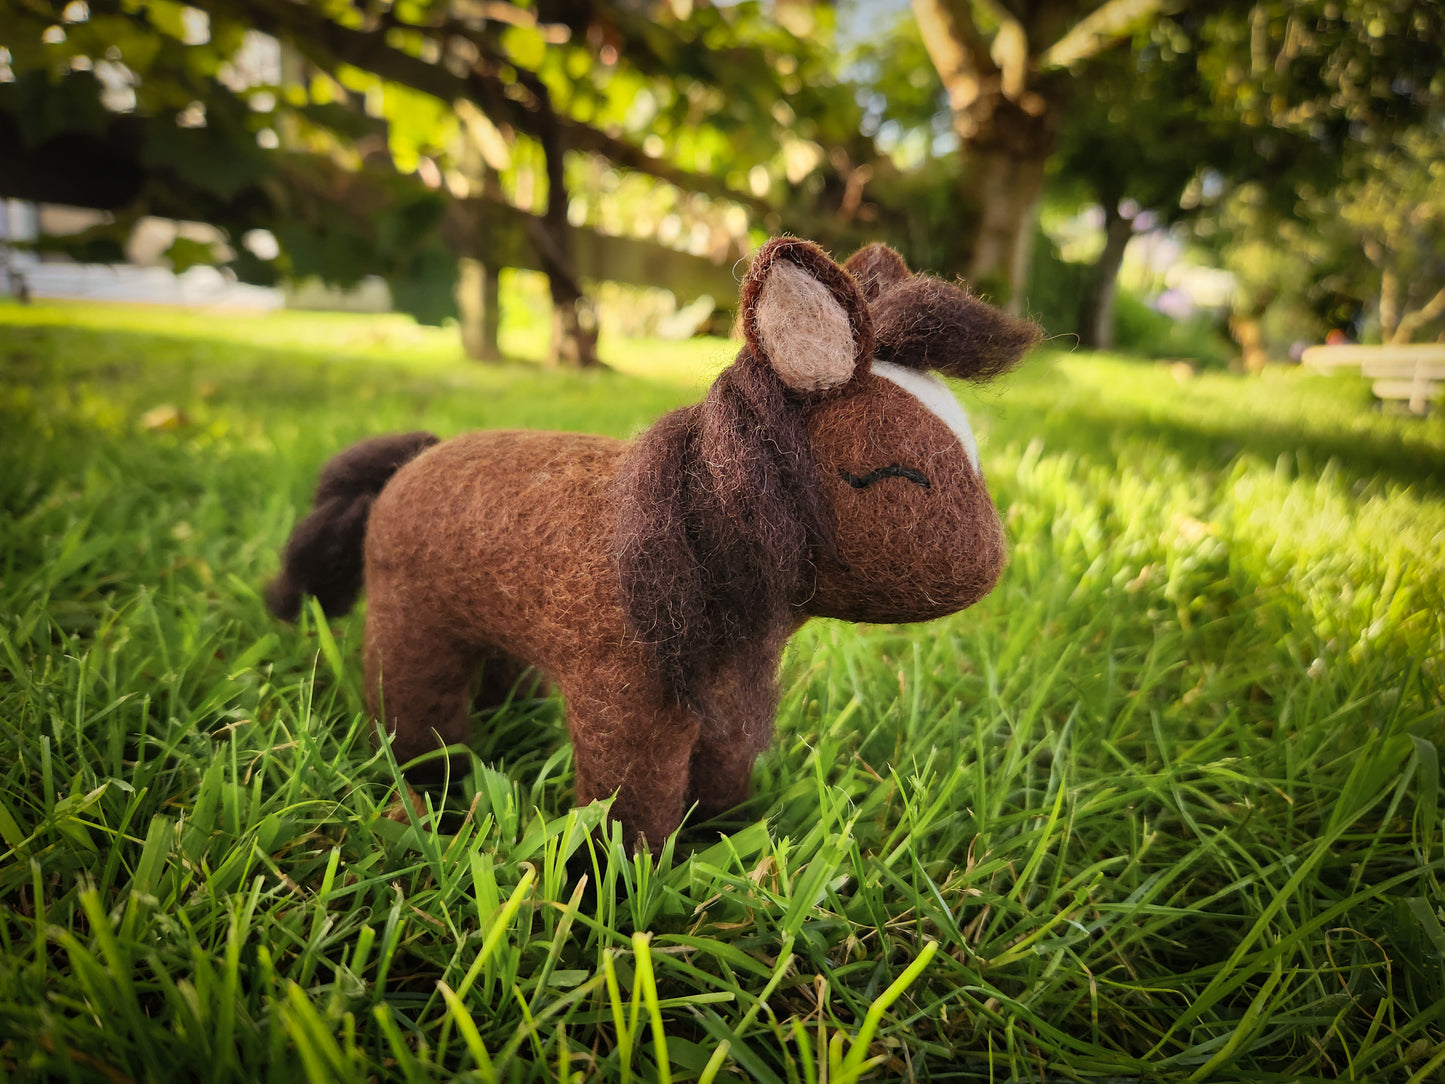 Hamilton the Horse - Felt Toy Horse in grass paddock